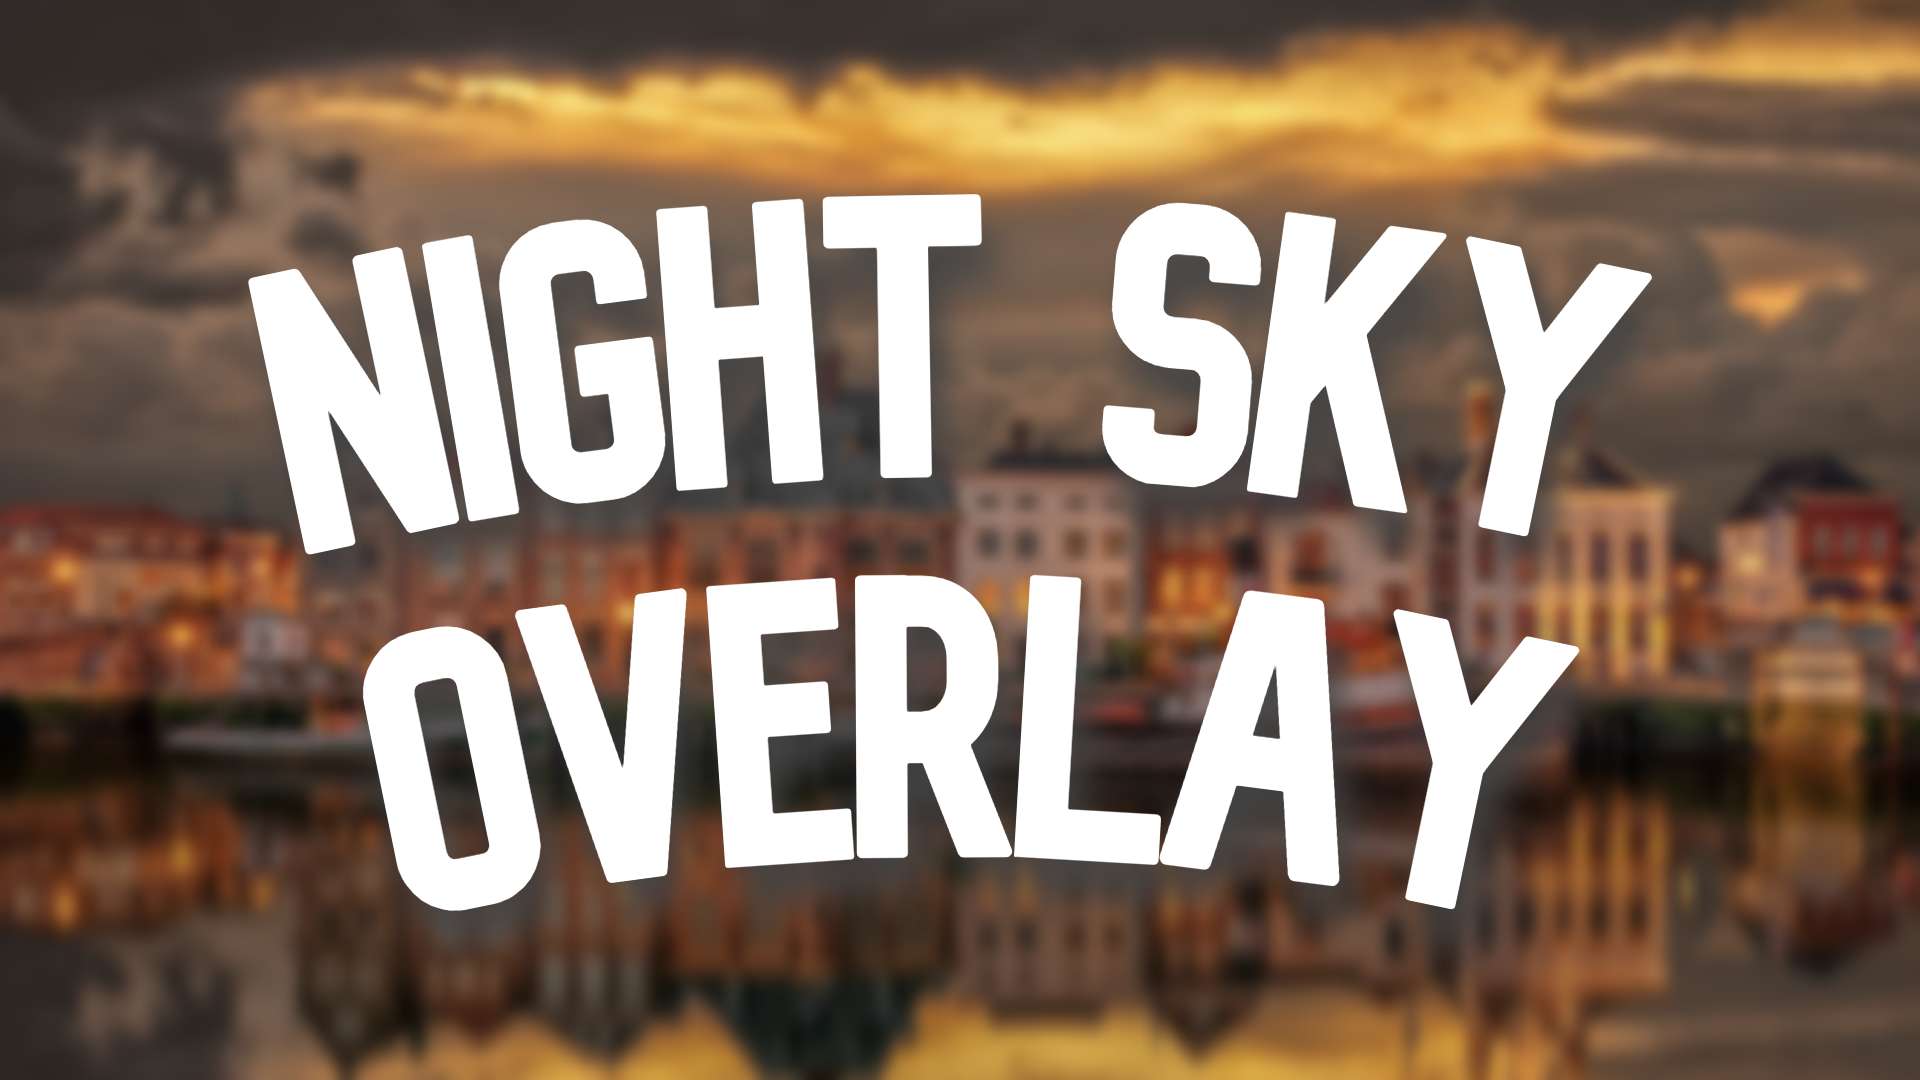 Night Sky Overlay #11 16 by rh56 on PvPRP